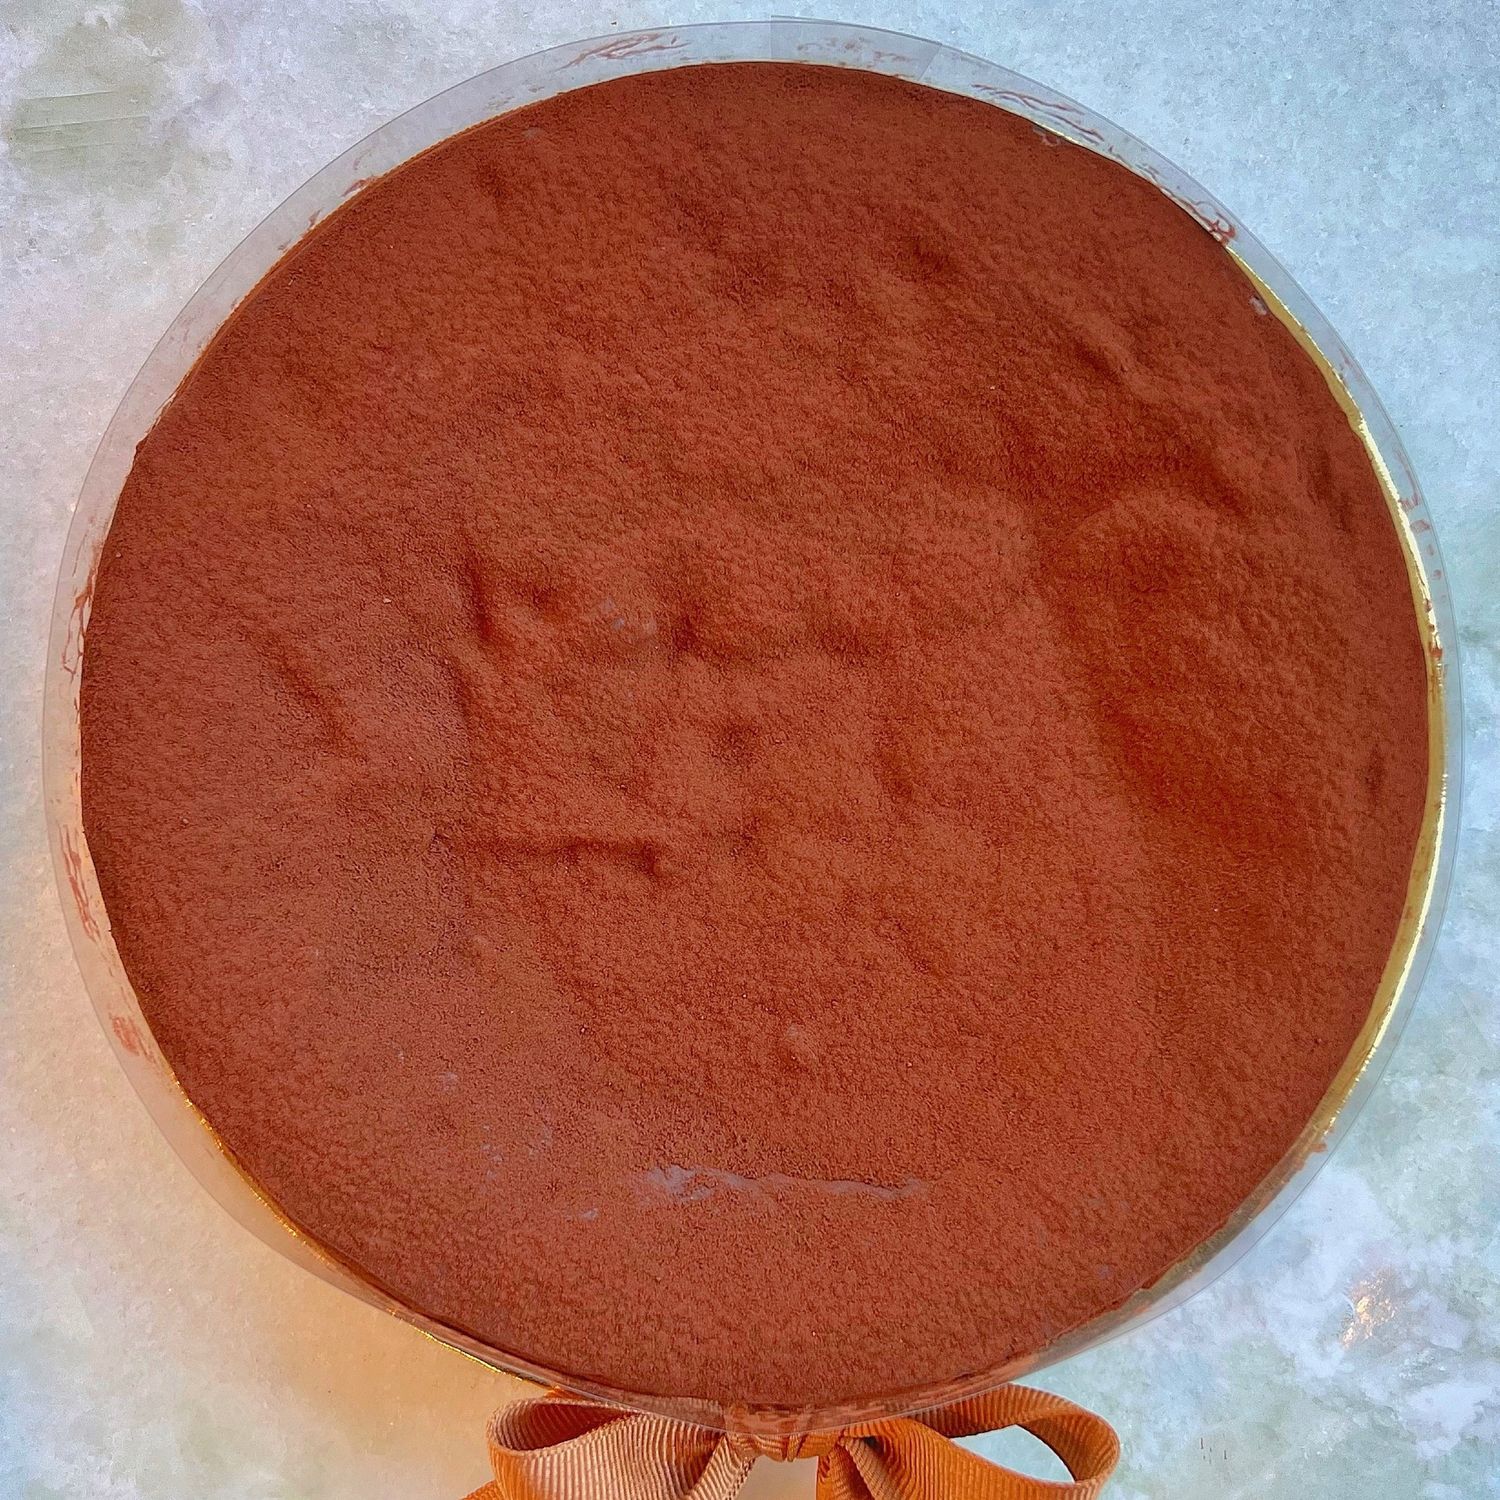 MDAY24 7” chocolate buckwheat cake